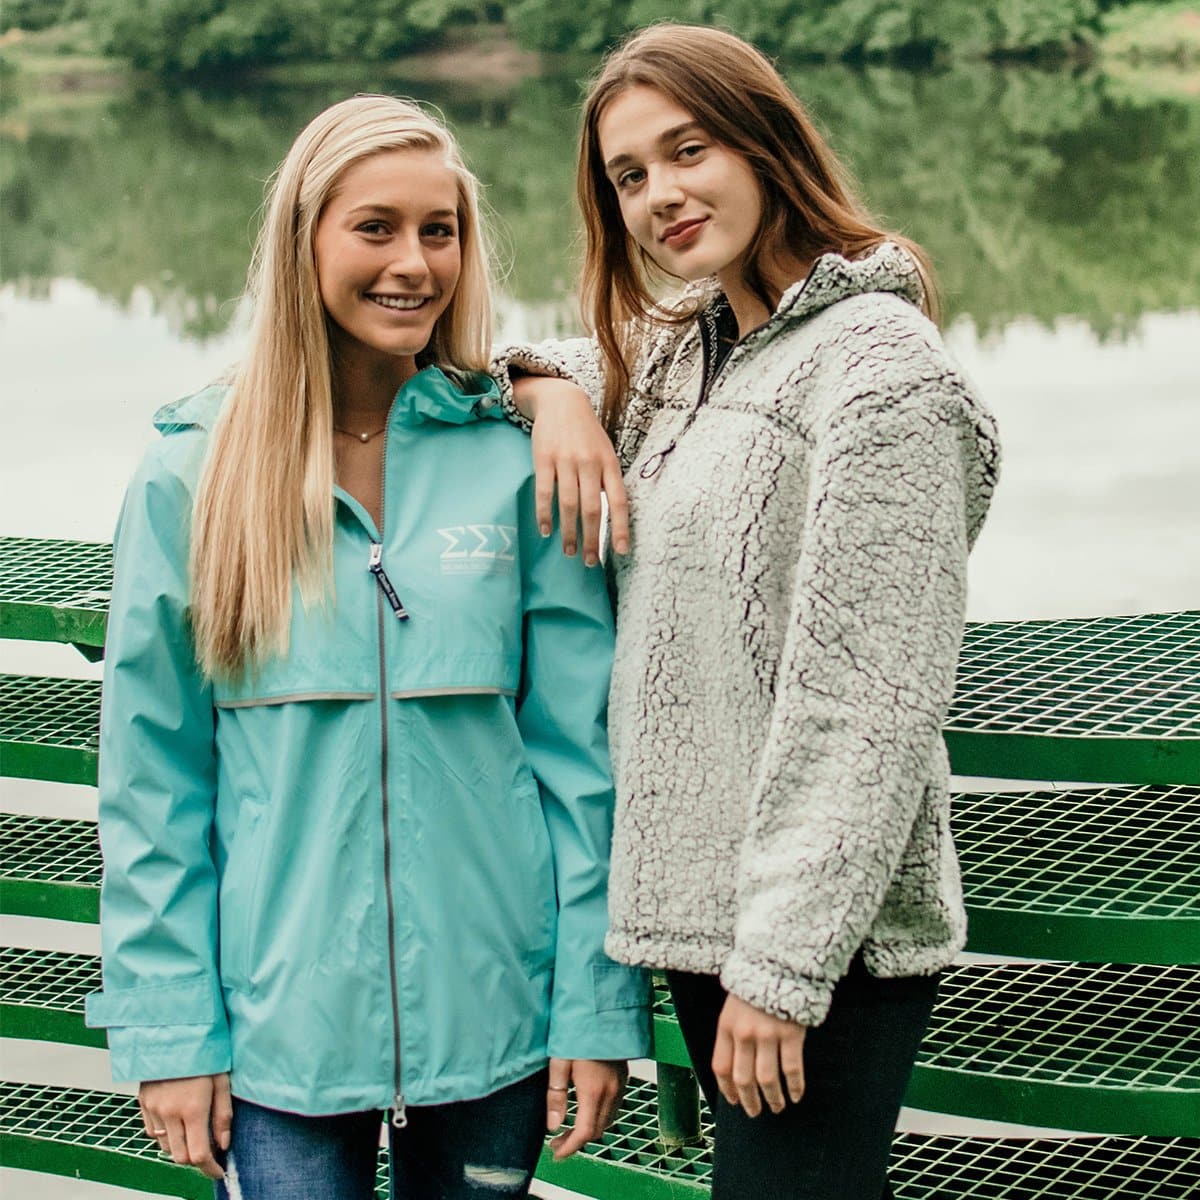 Kappa Delta Charles River Aqua Rain Jacket | Kappa Delta | Outerwear > Jackets